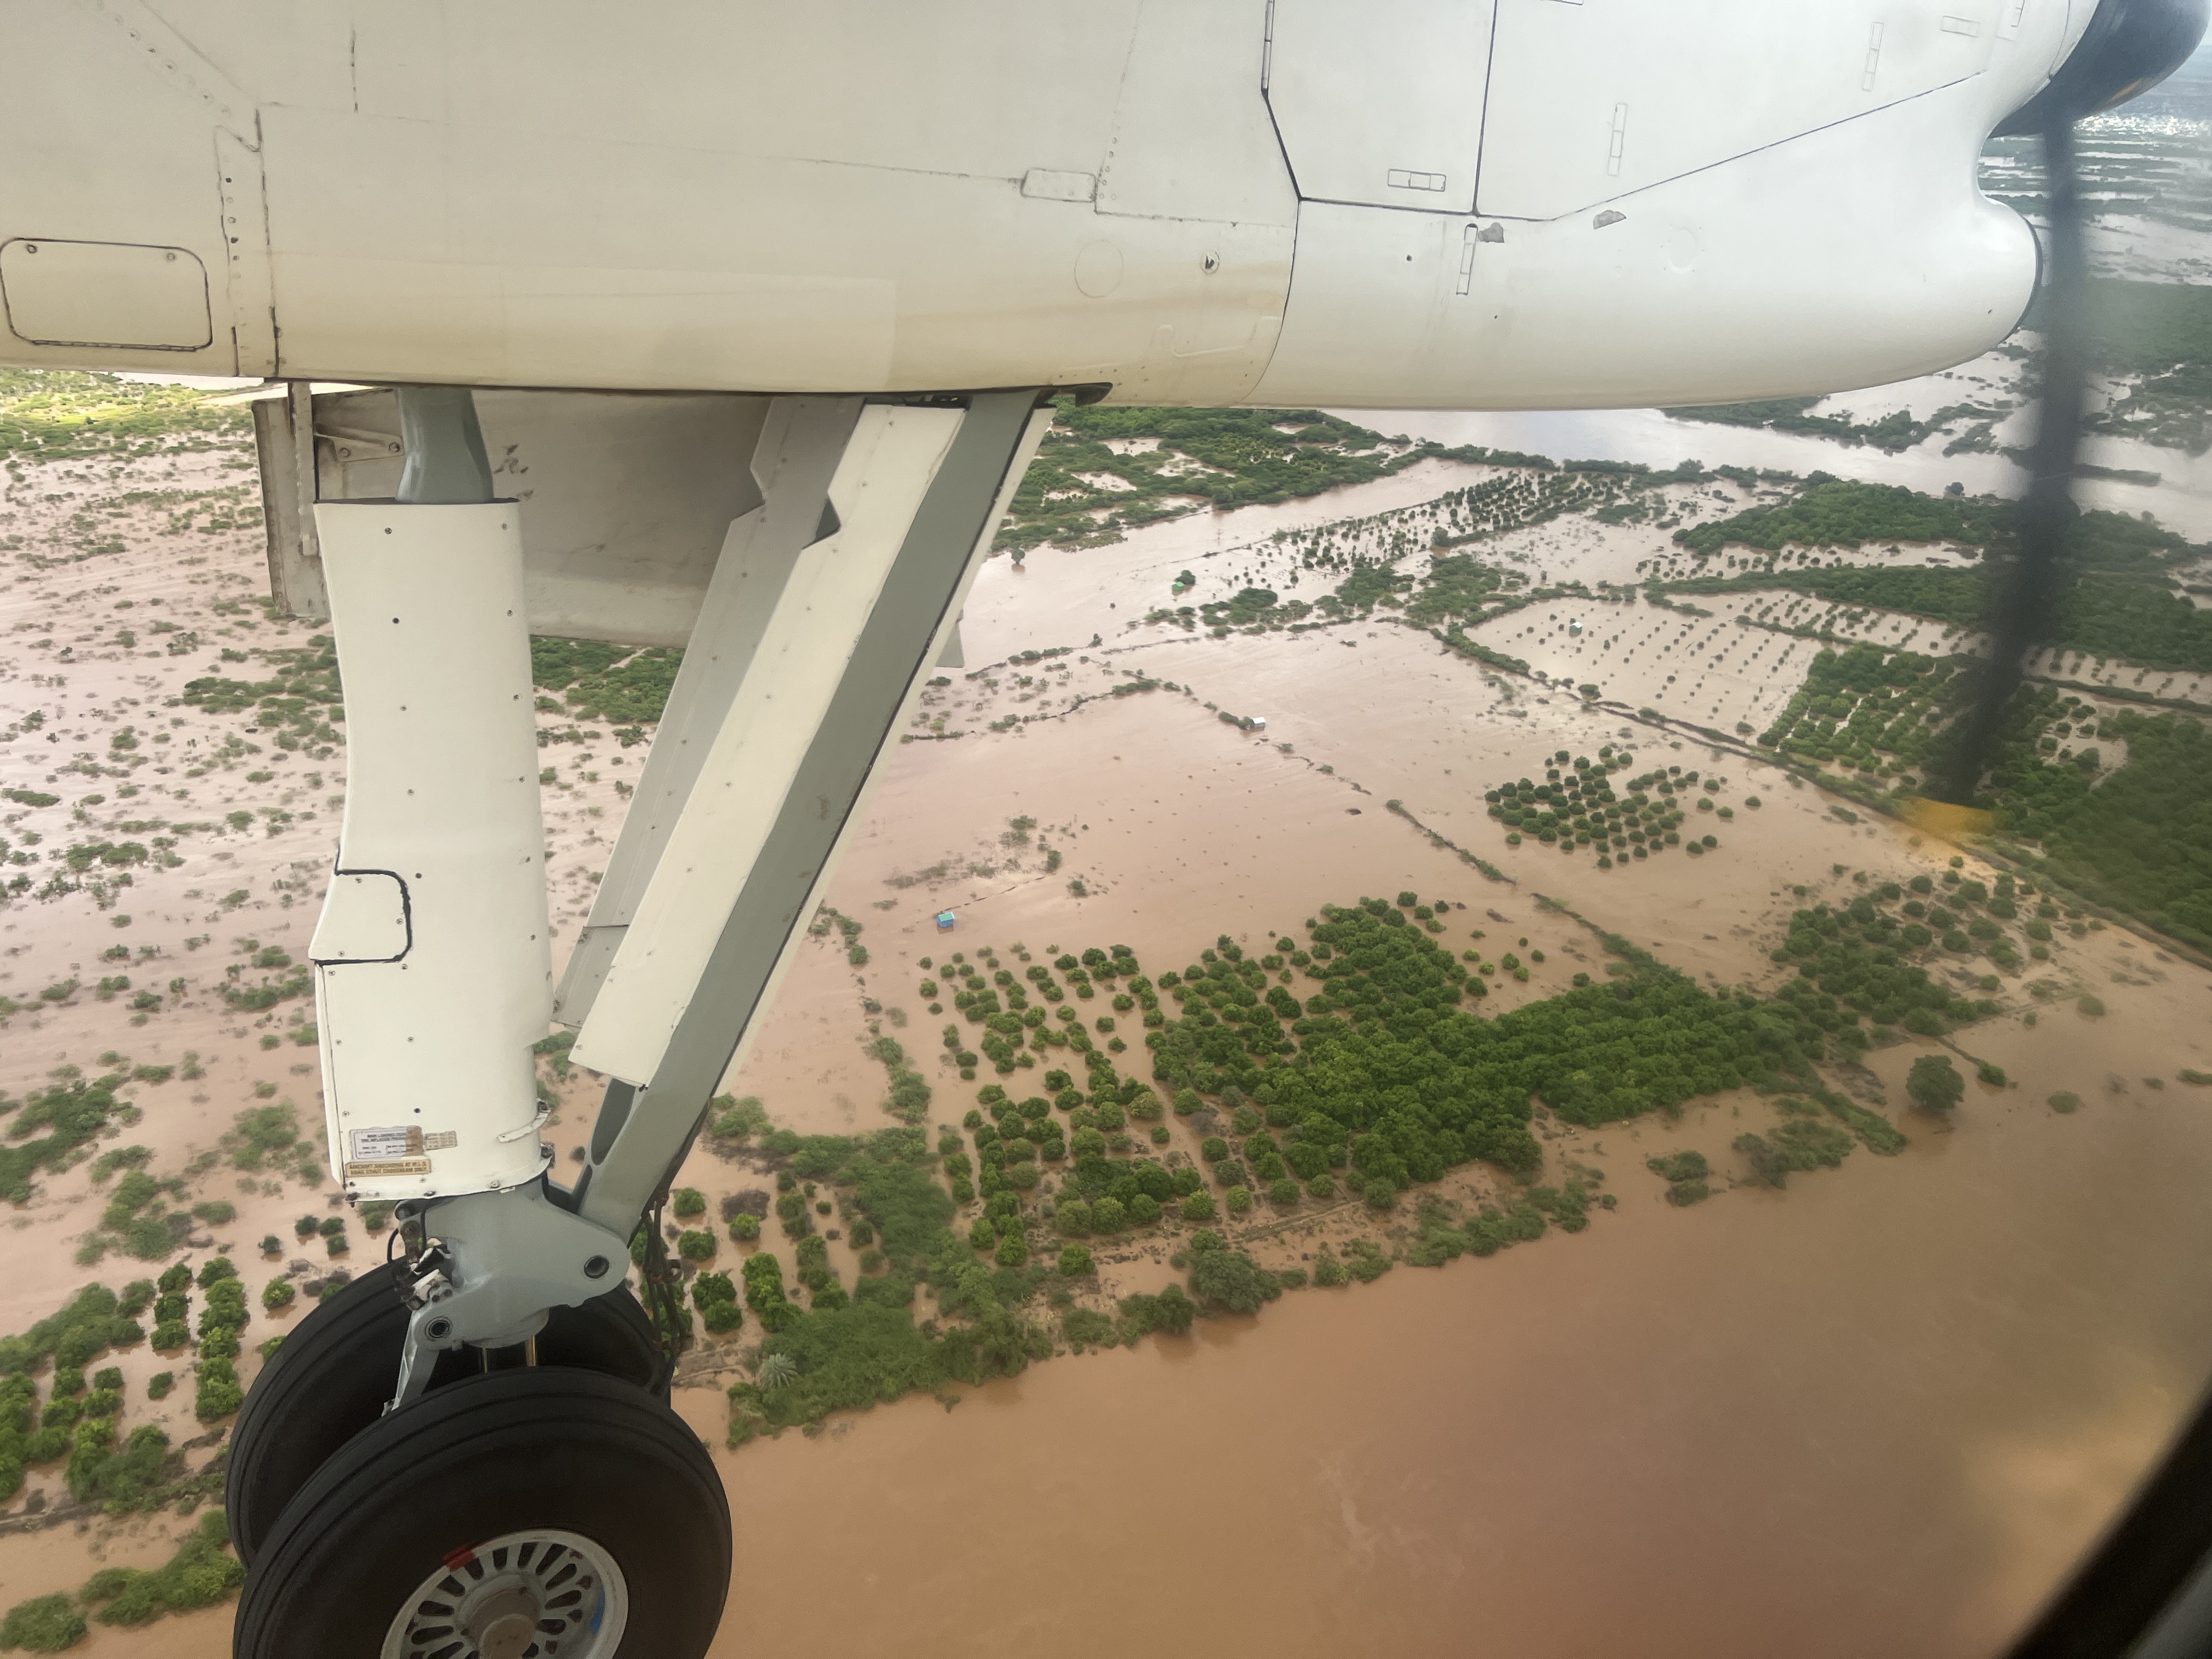 Severe flooding in Somalia has cut off major roads 